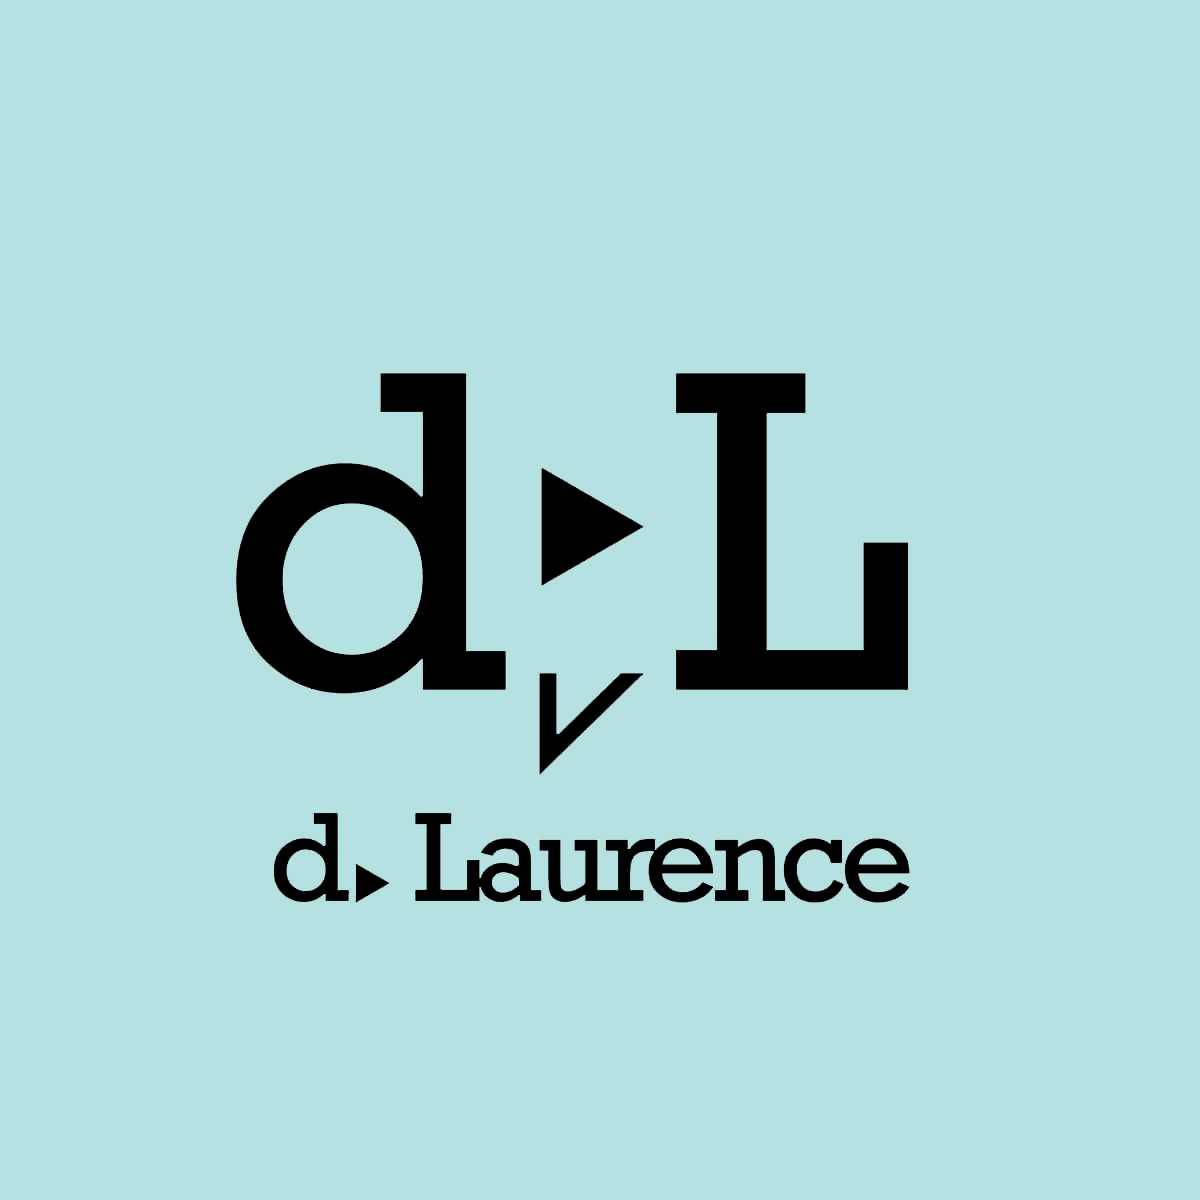 dovina laurence voice artist secondary logo